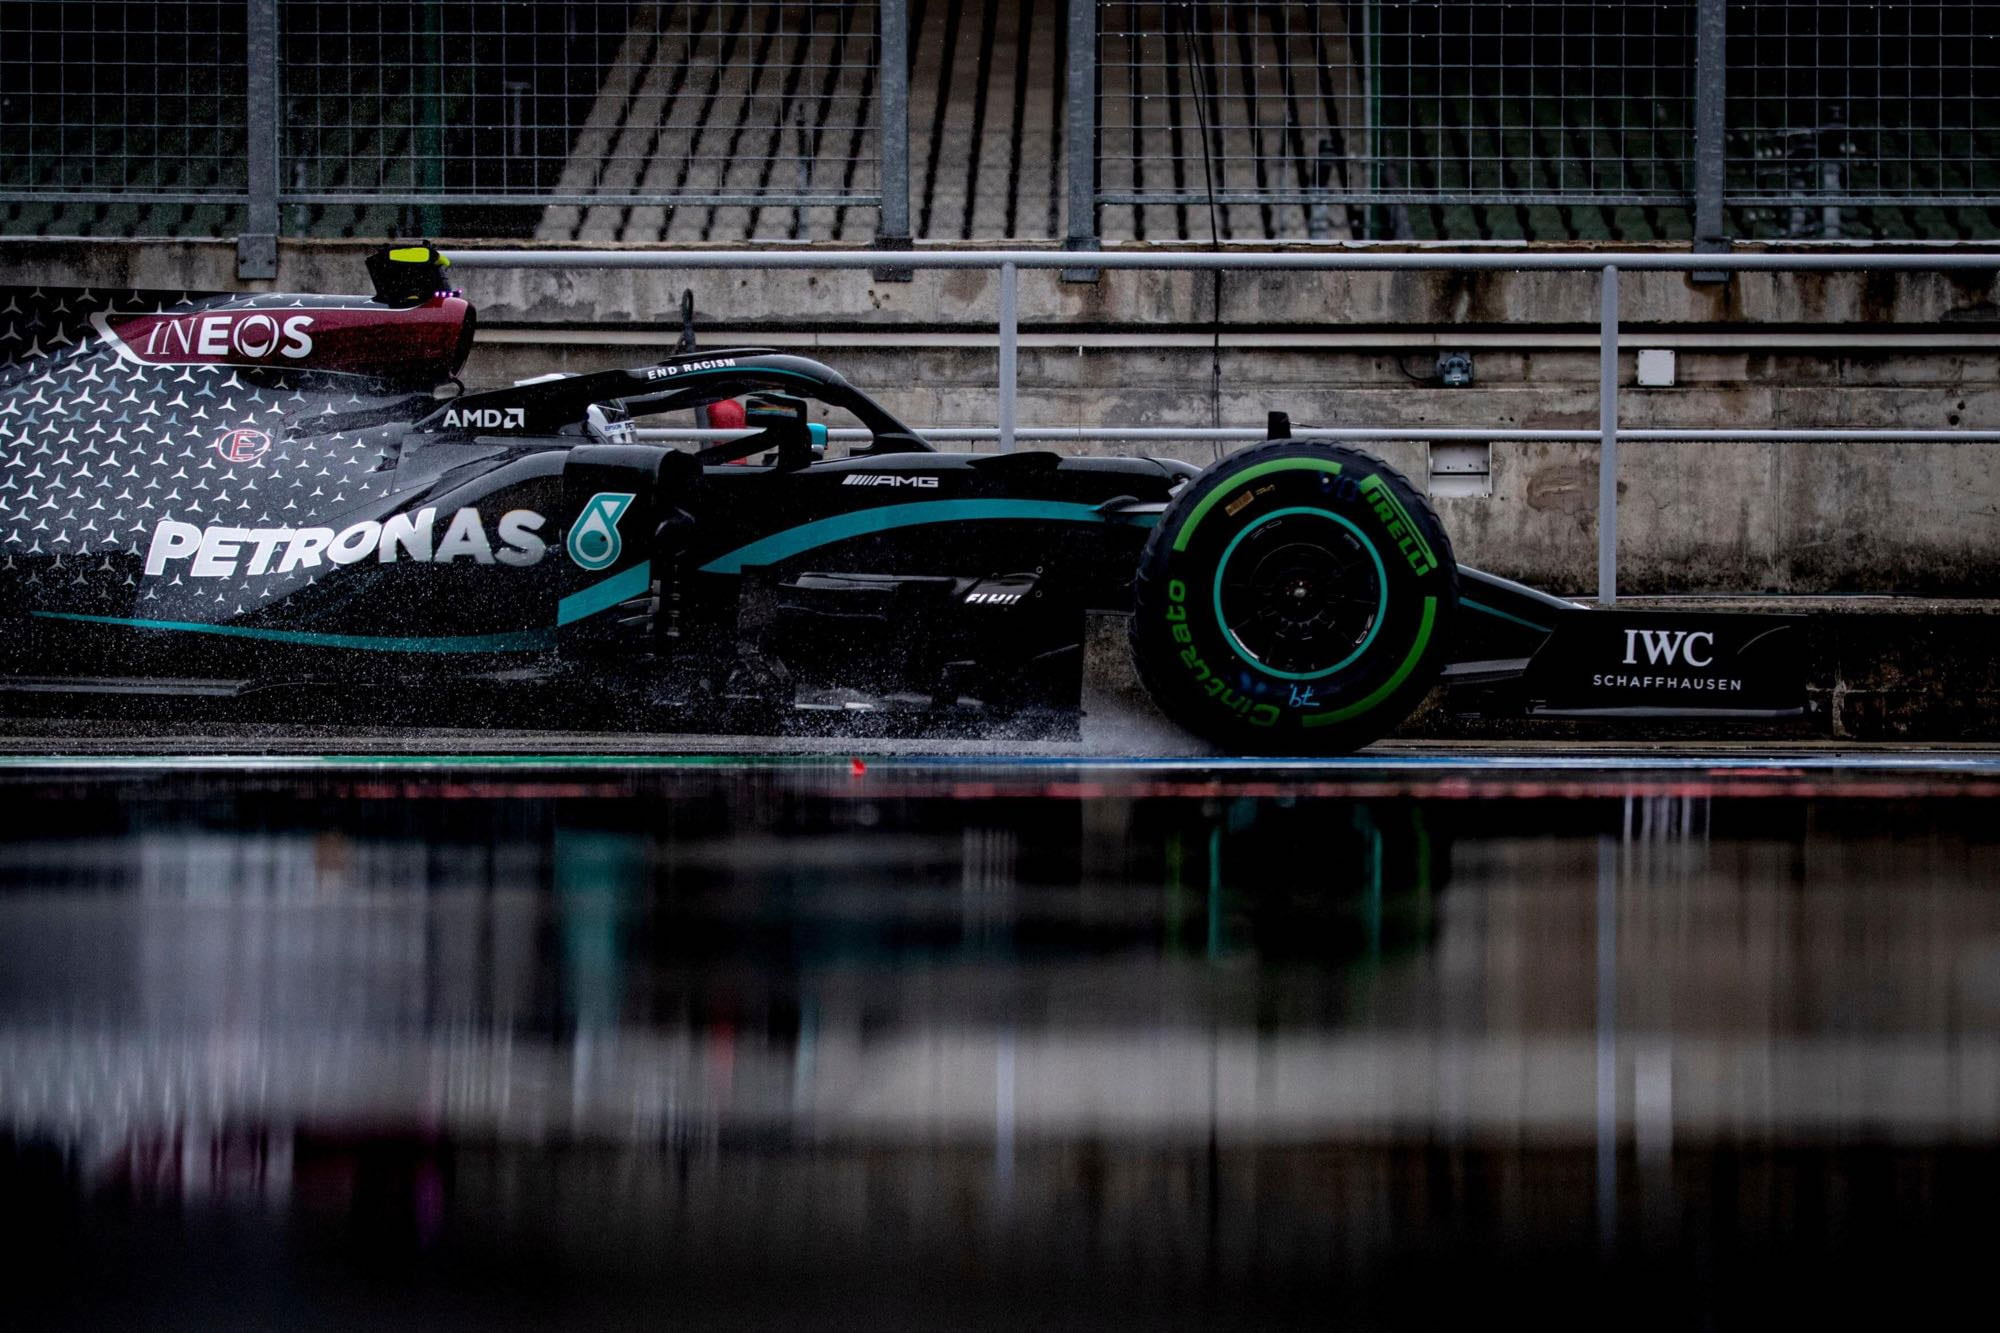 Wallpaper Mercedes Amg Petronas, Ineos, Iwc, Formula 1